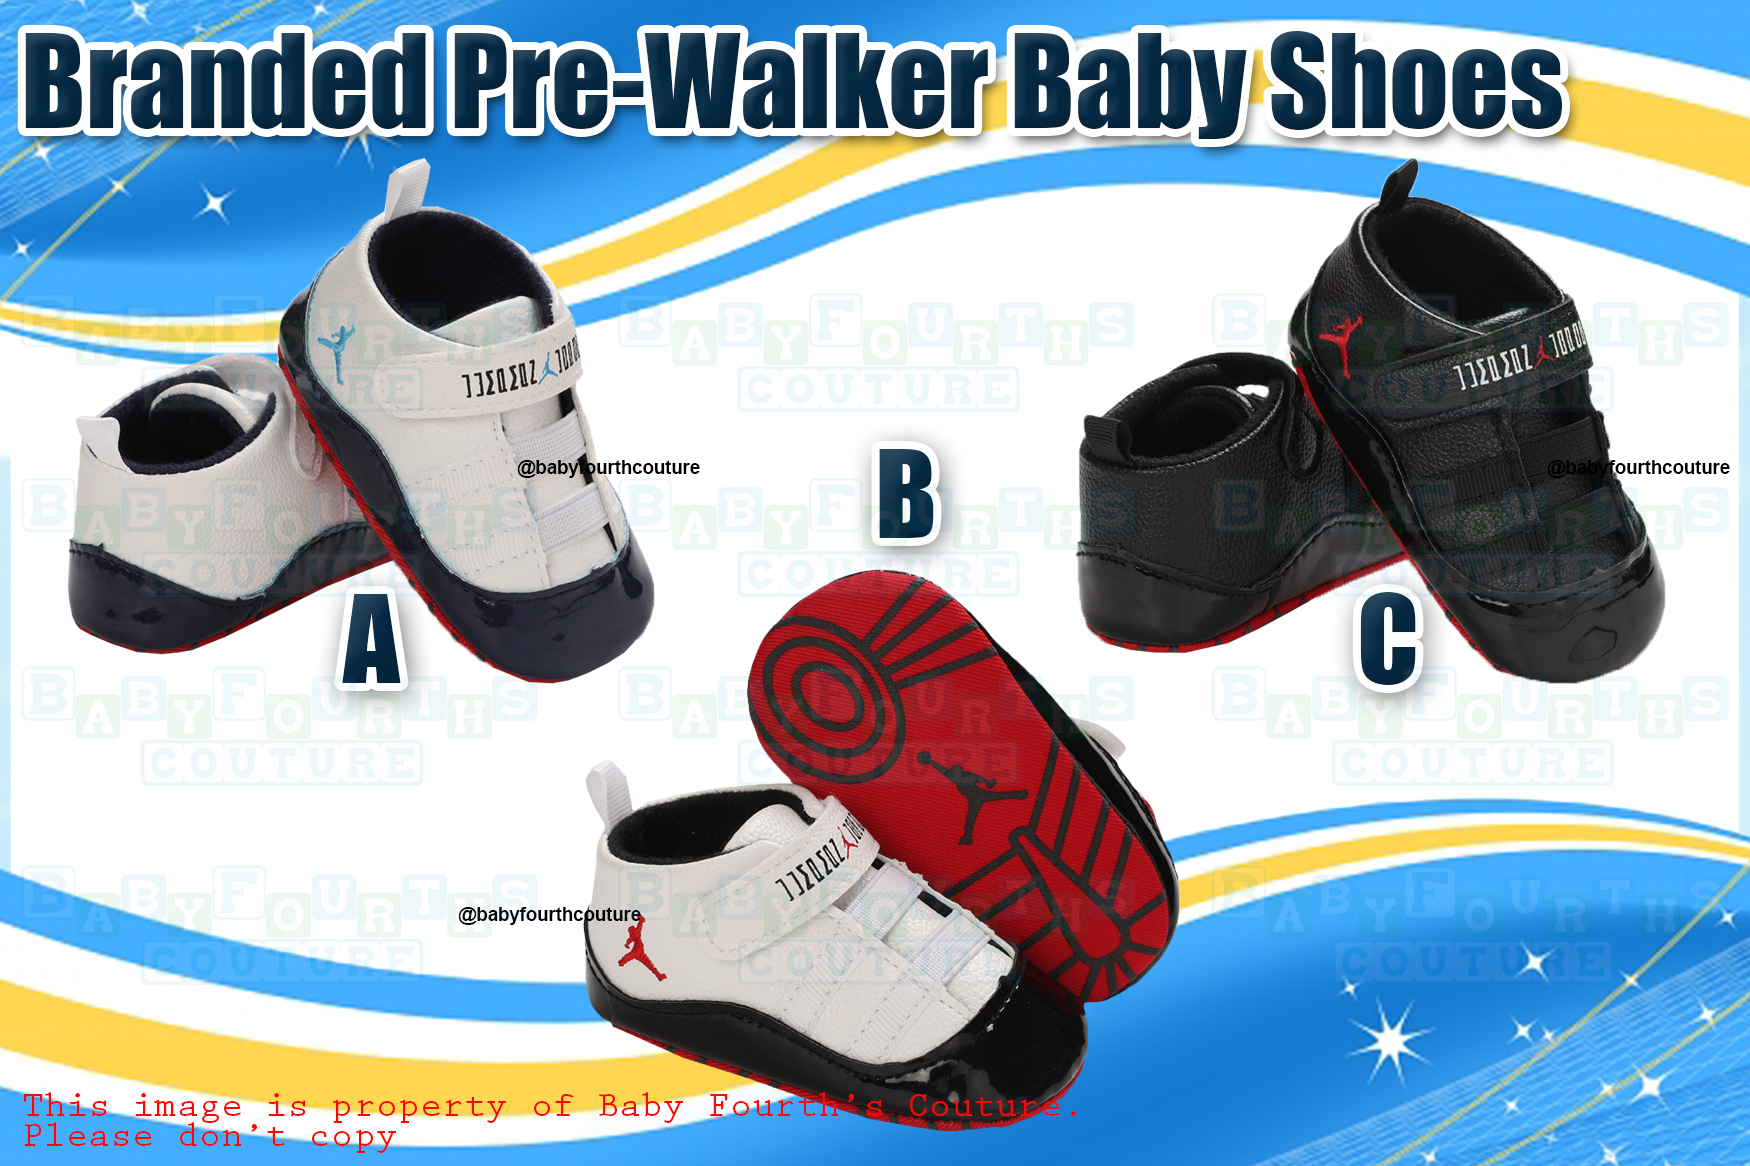 size 2 pre walker shoes